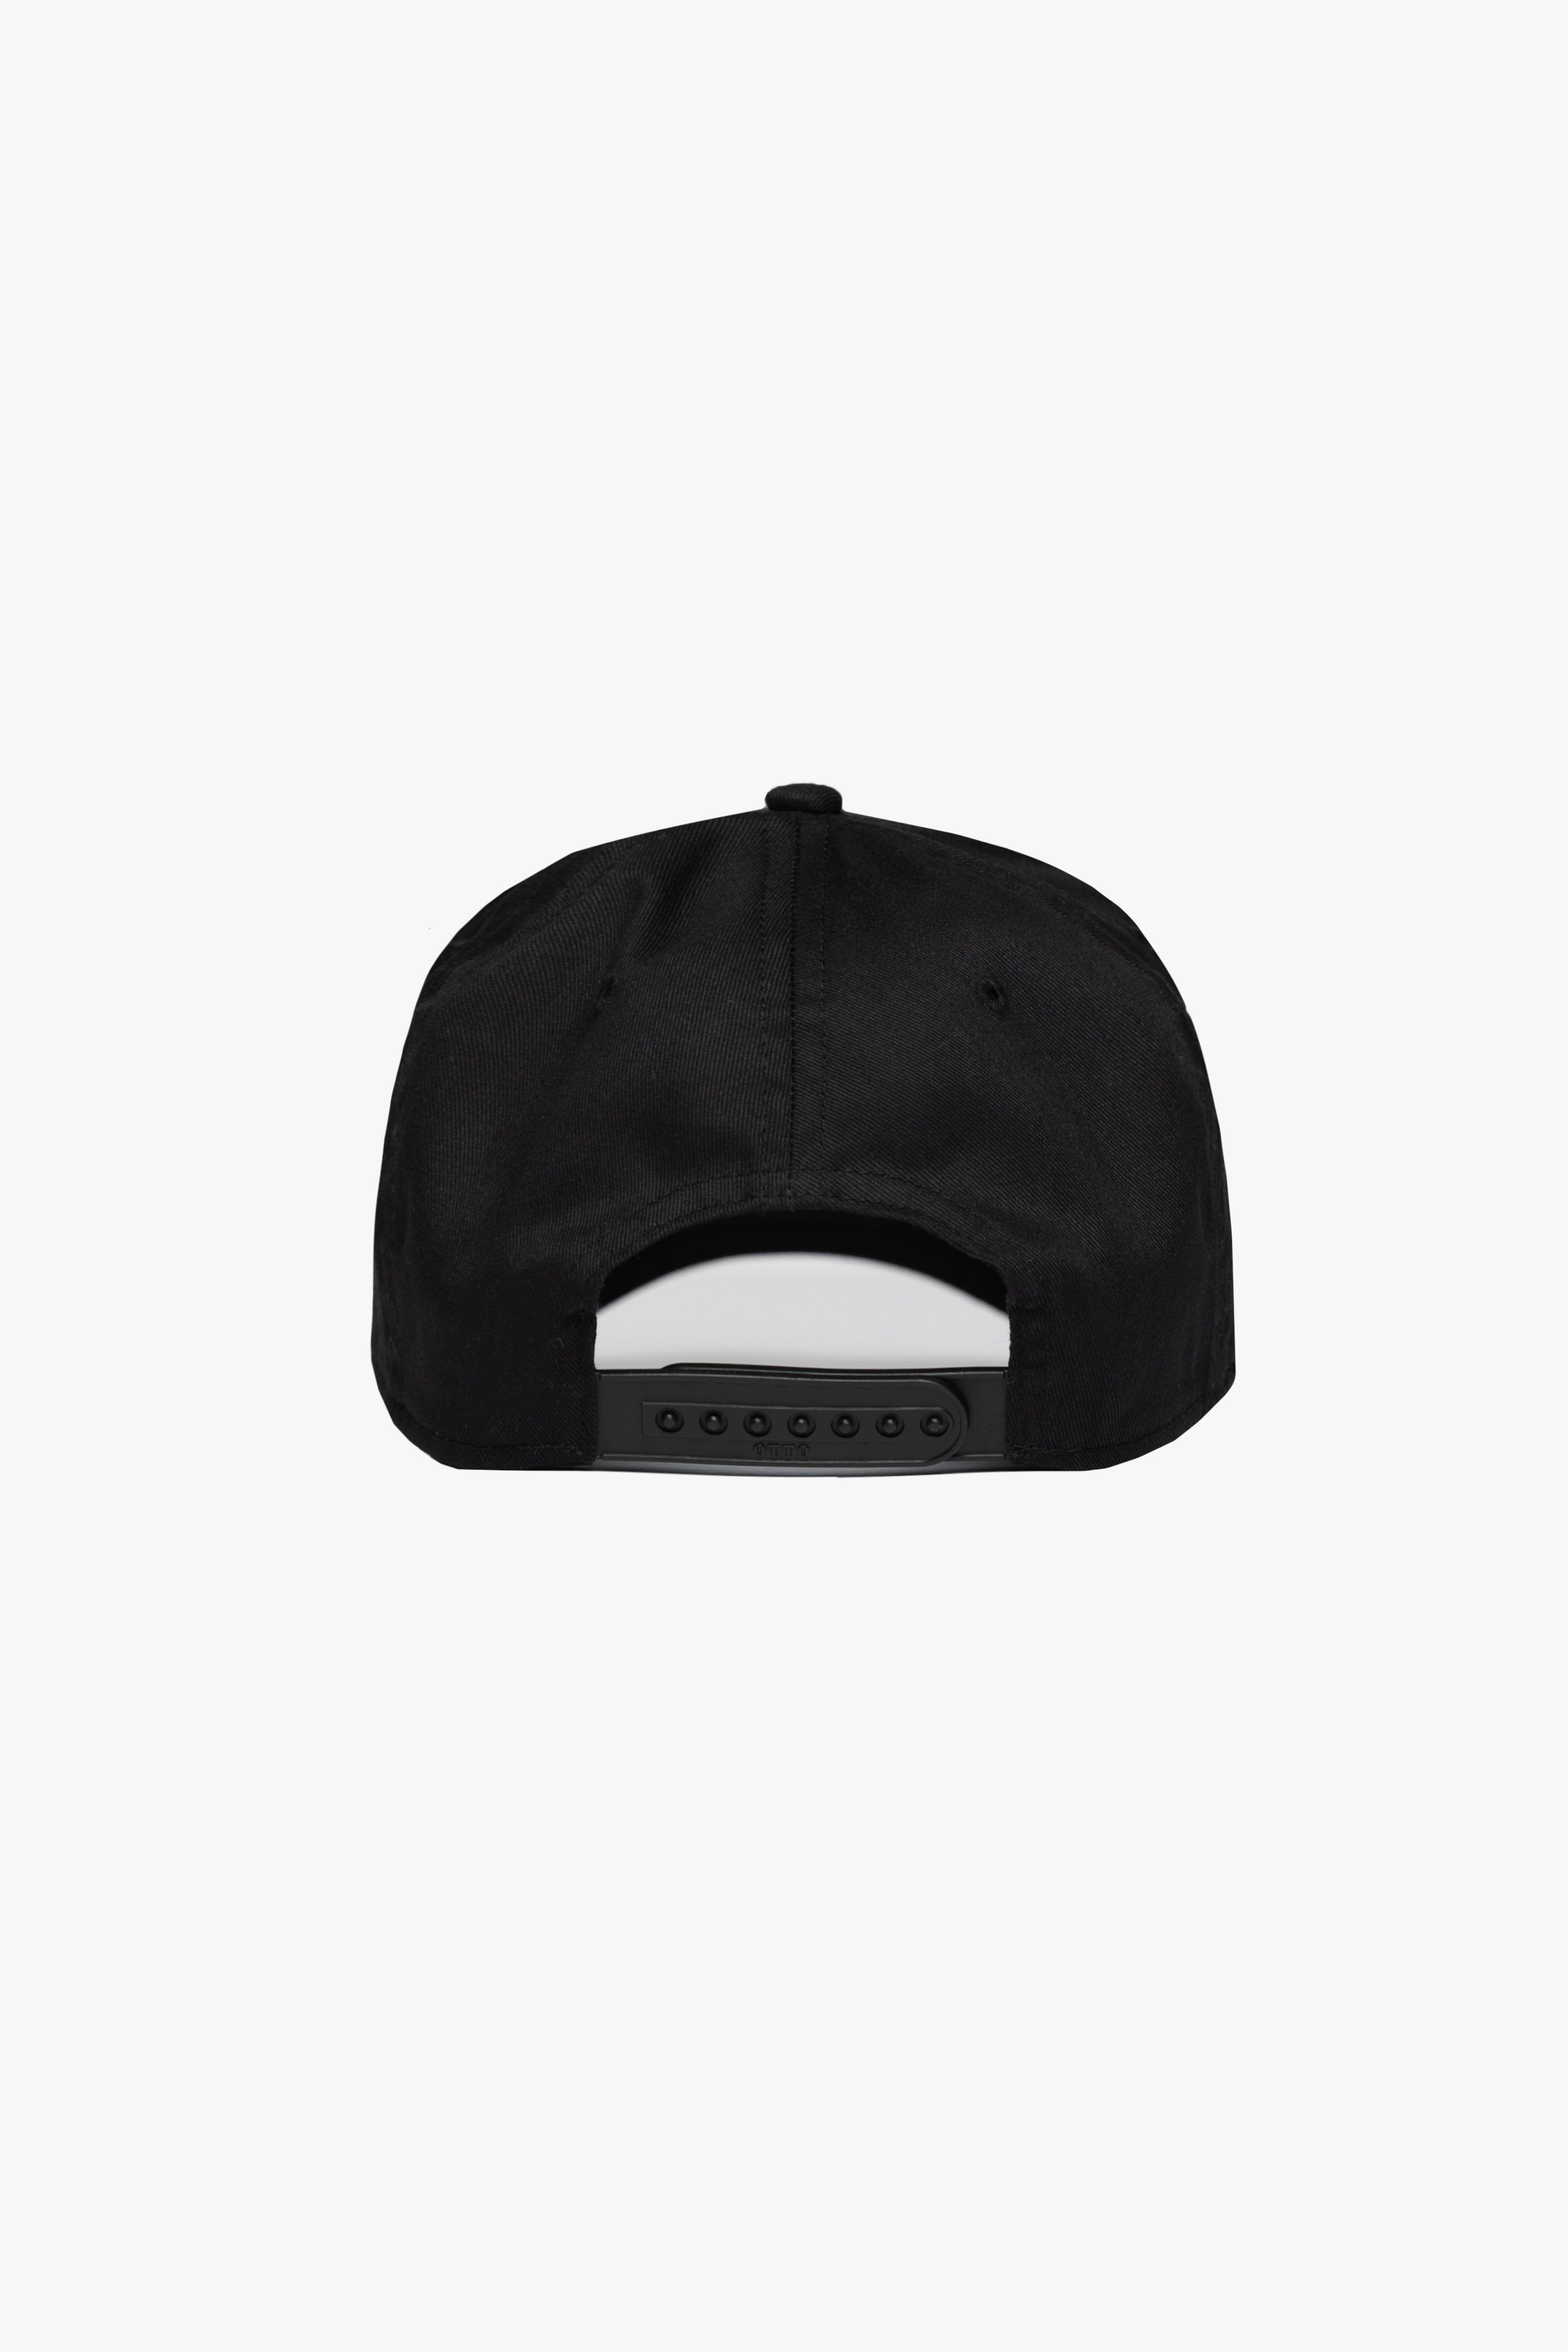 Midnight Black Tennis Snapback Hat - TRINITY